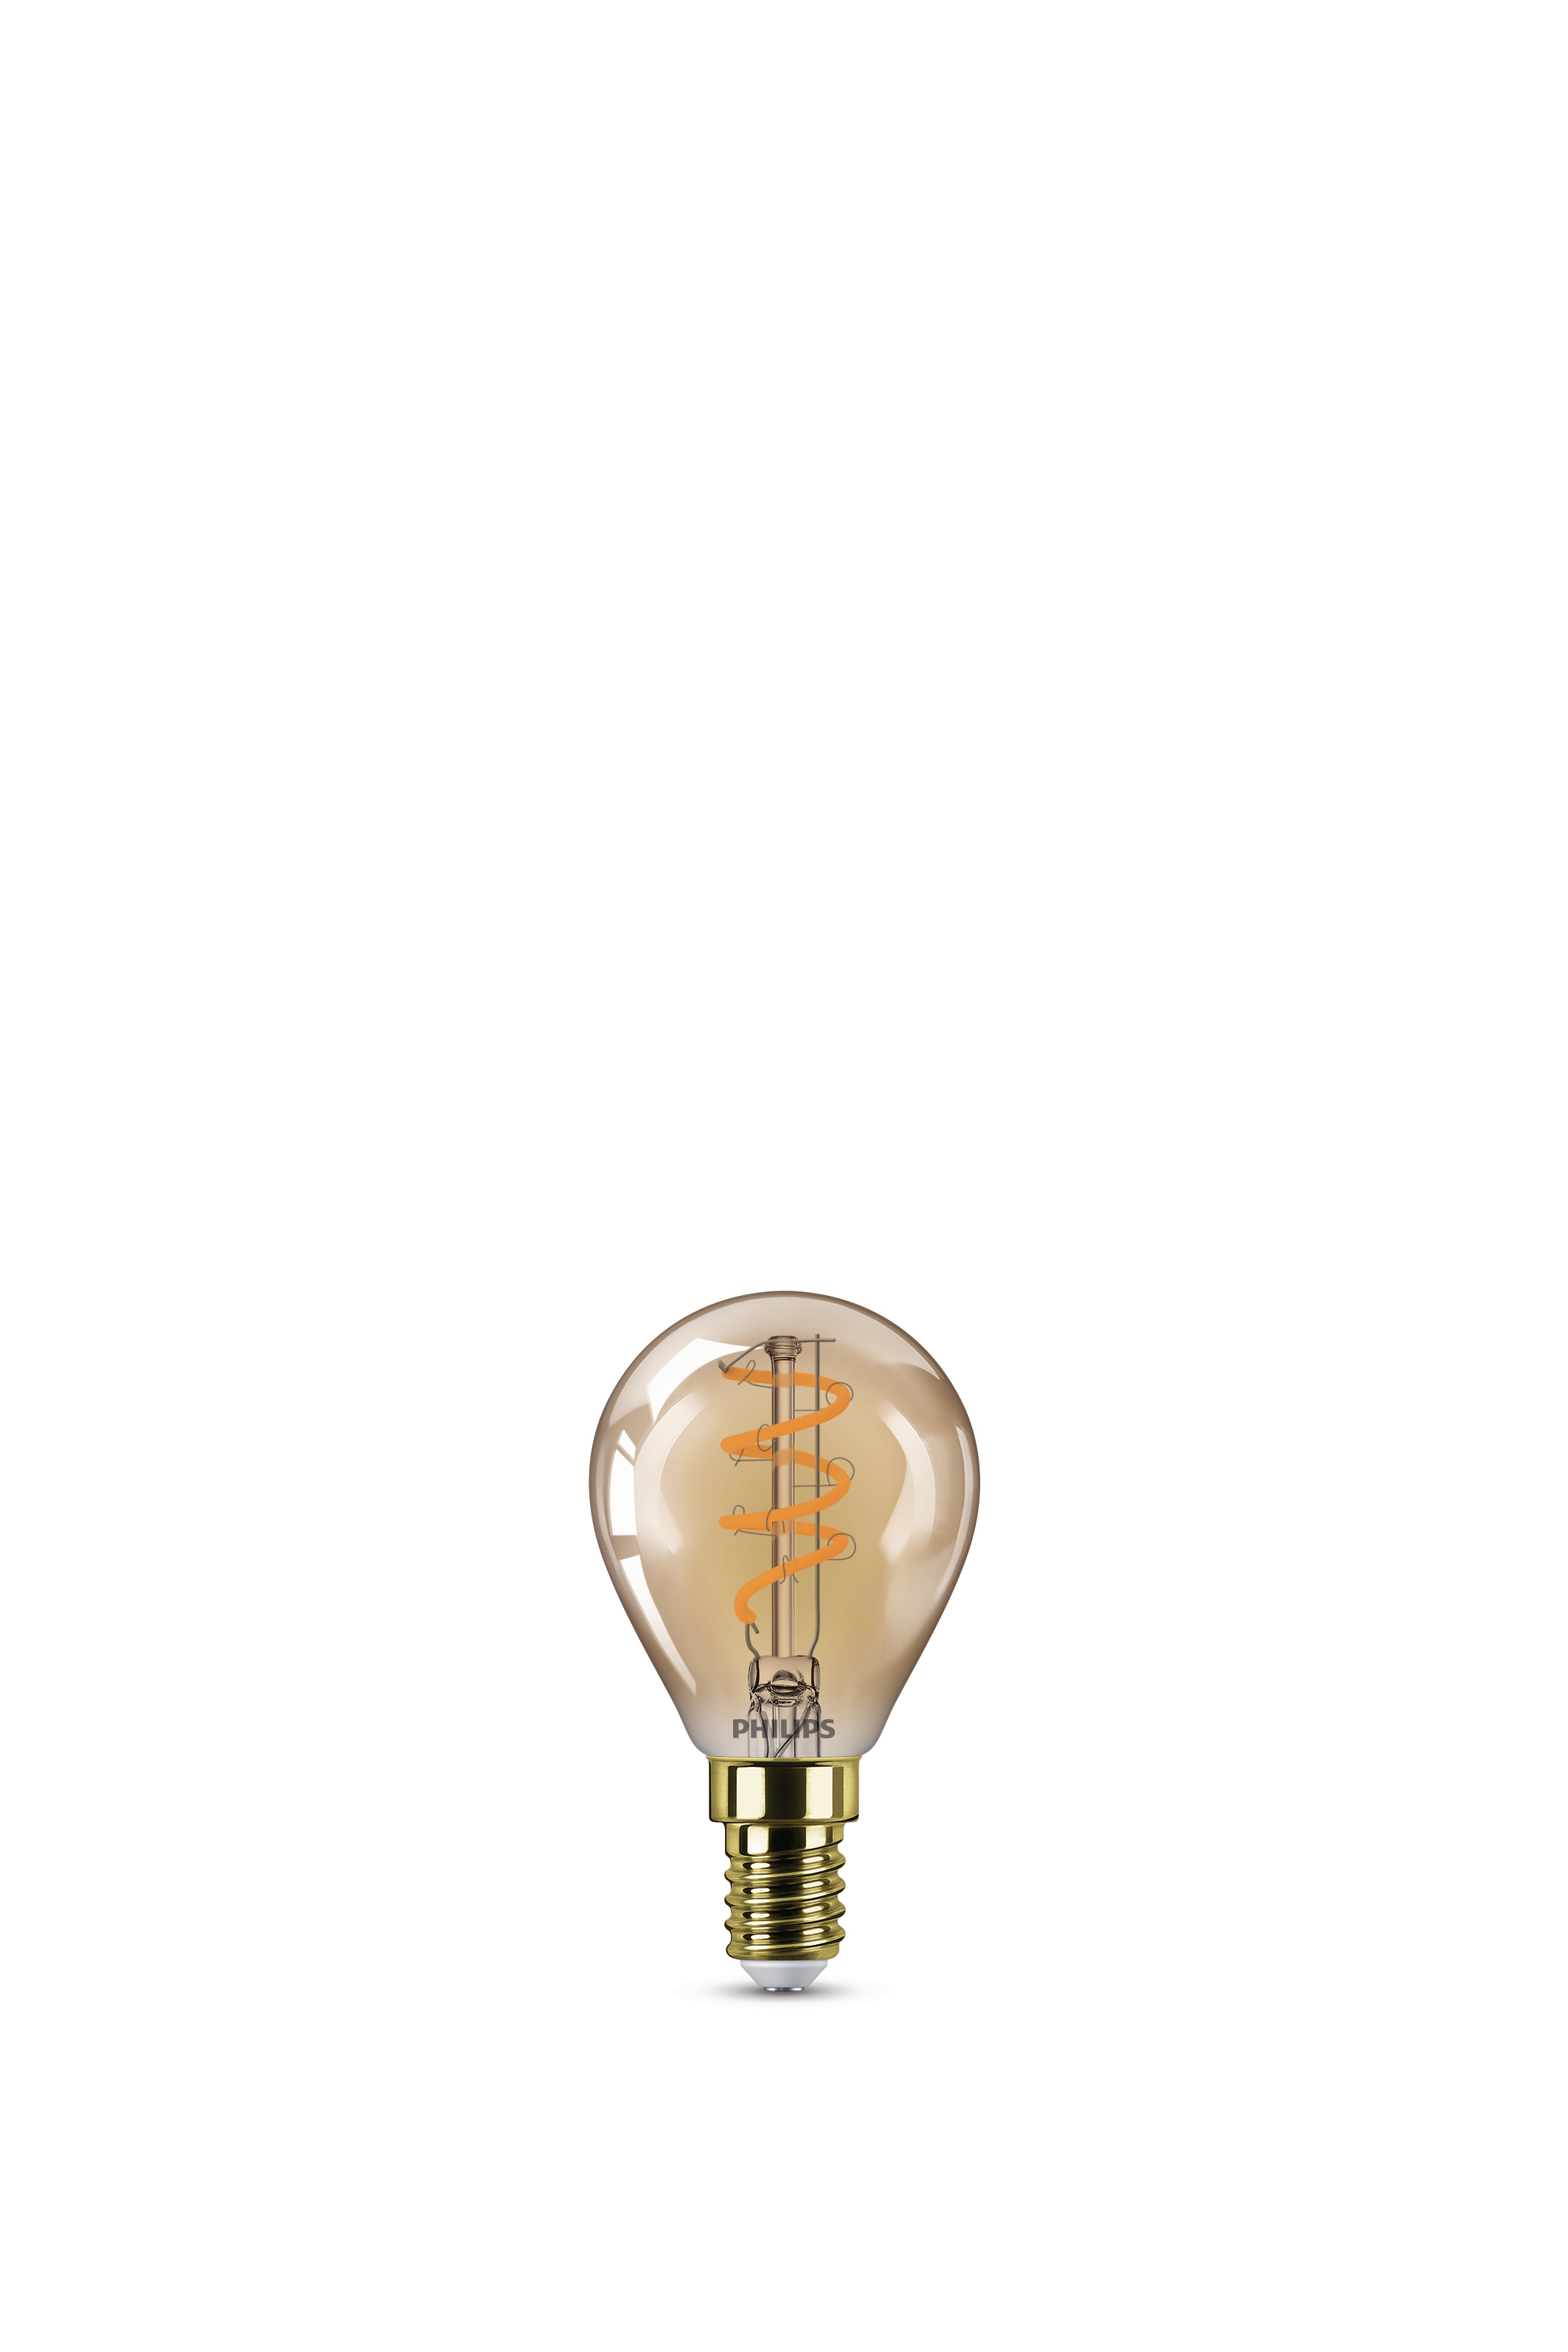 mit dimmbar E14 Tropfenlampe Lampe Warmweiß 15W, classic Vintage Sockel, LED PHILIPS